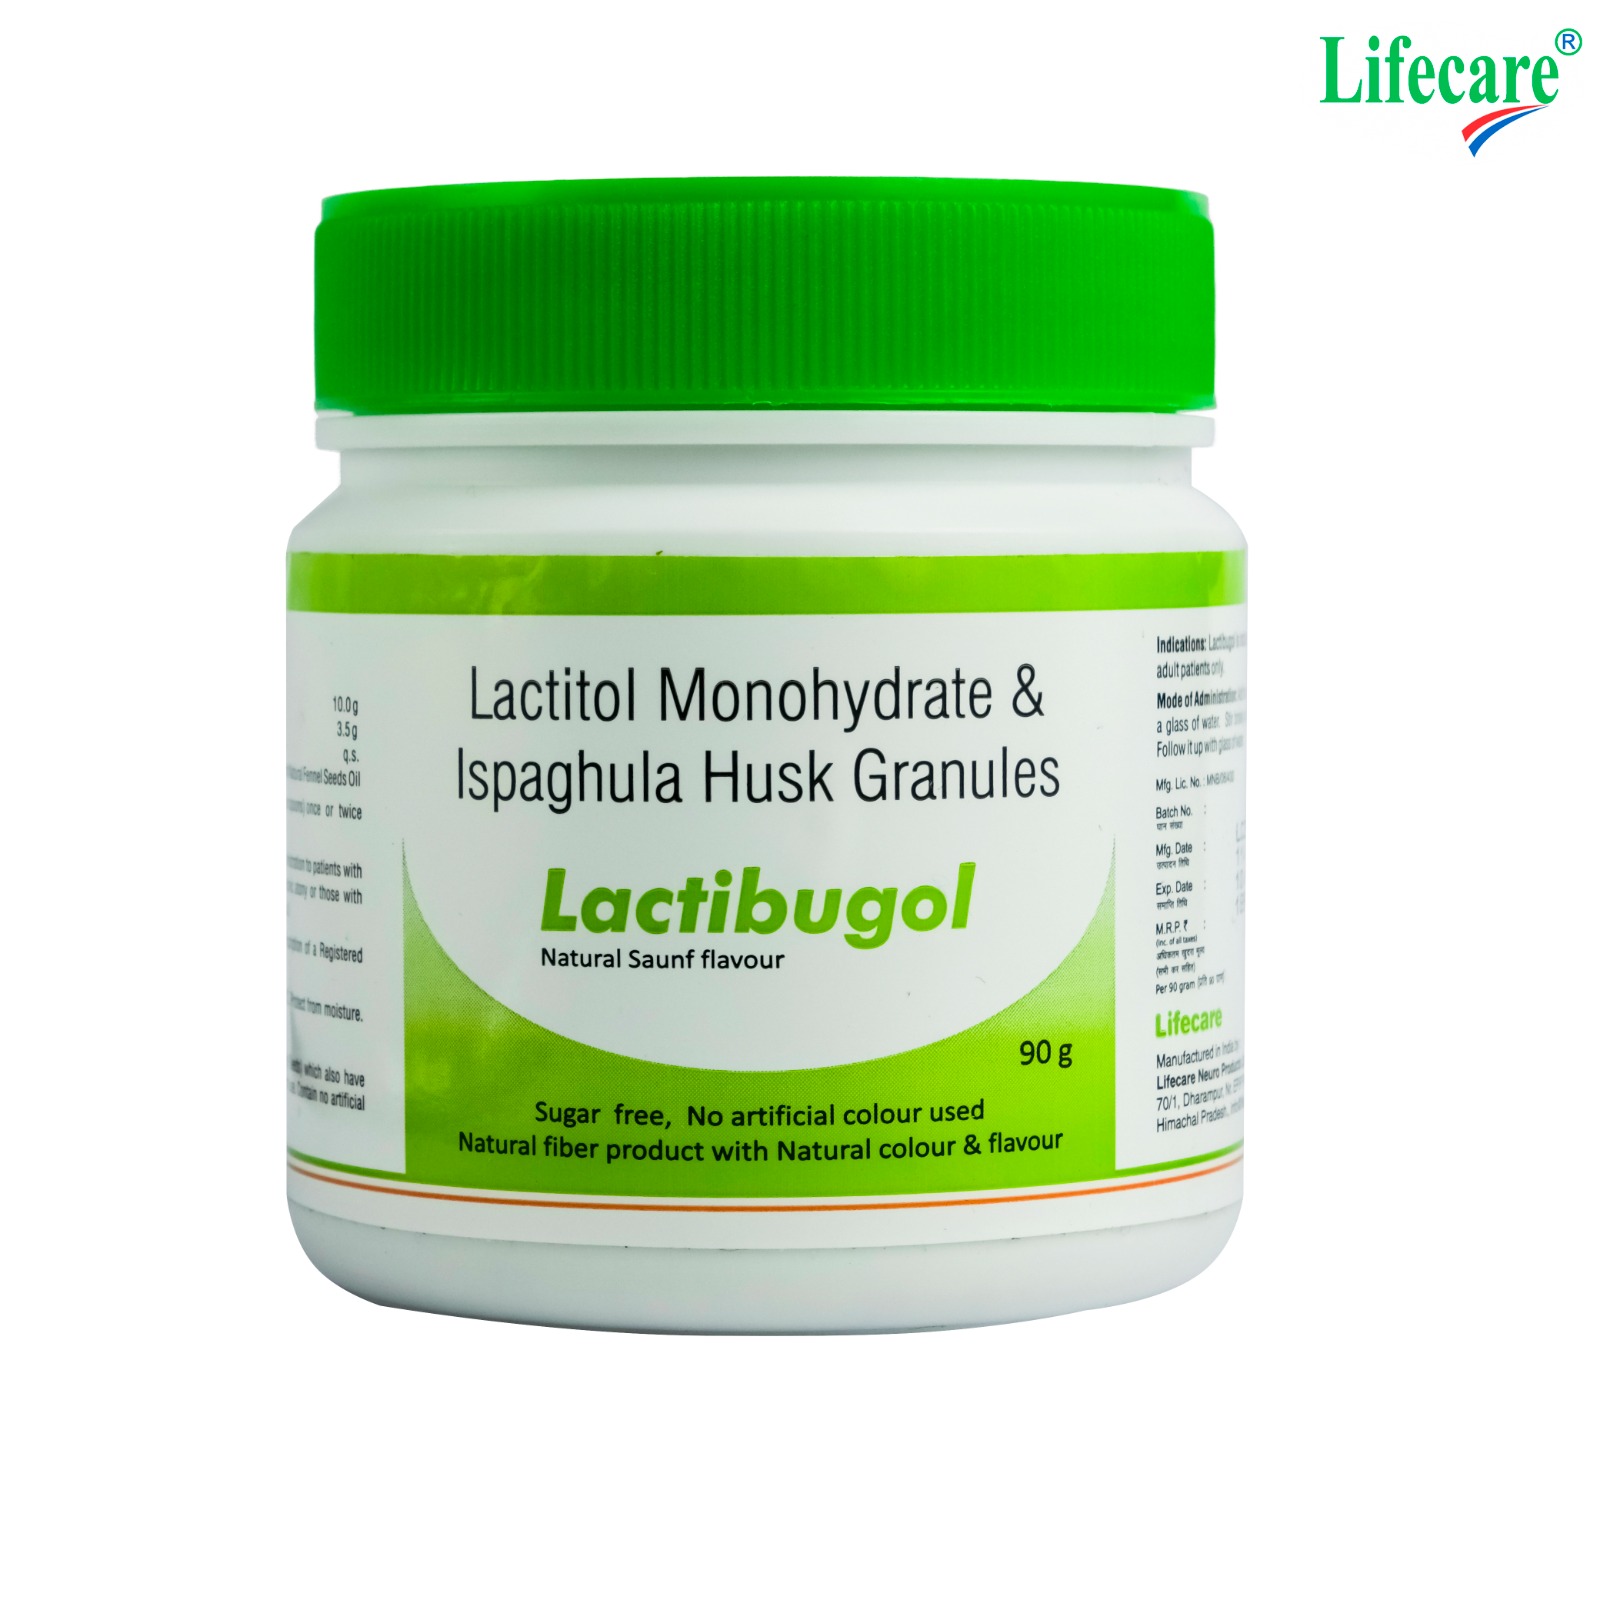 Lactitol Monohydrate and Ispaghula Husk Granules